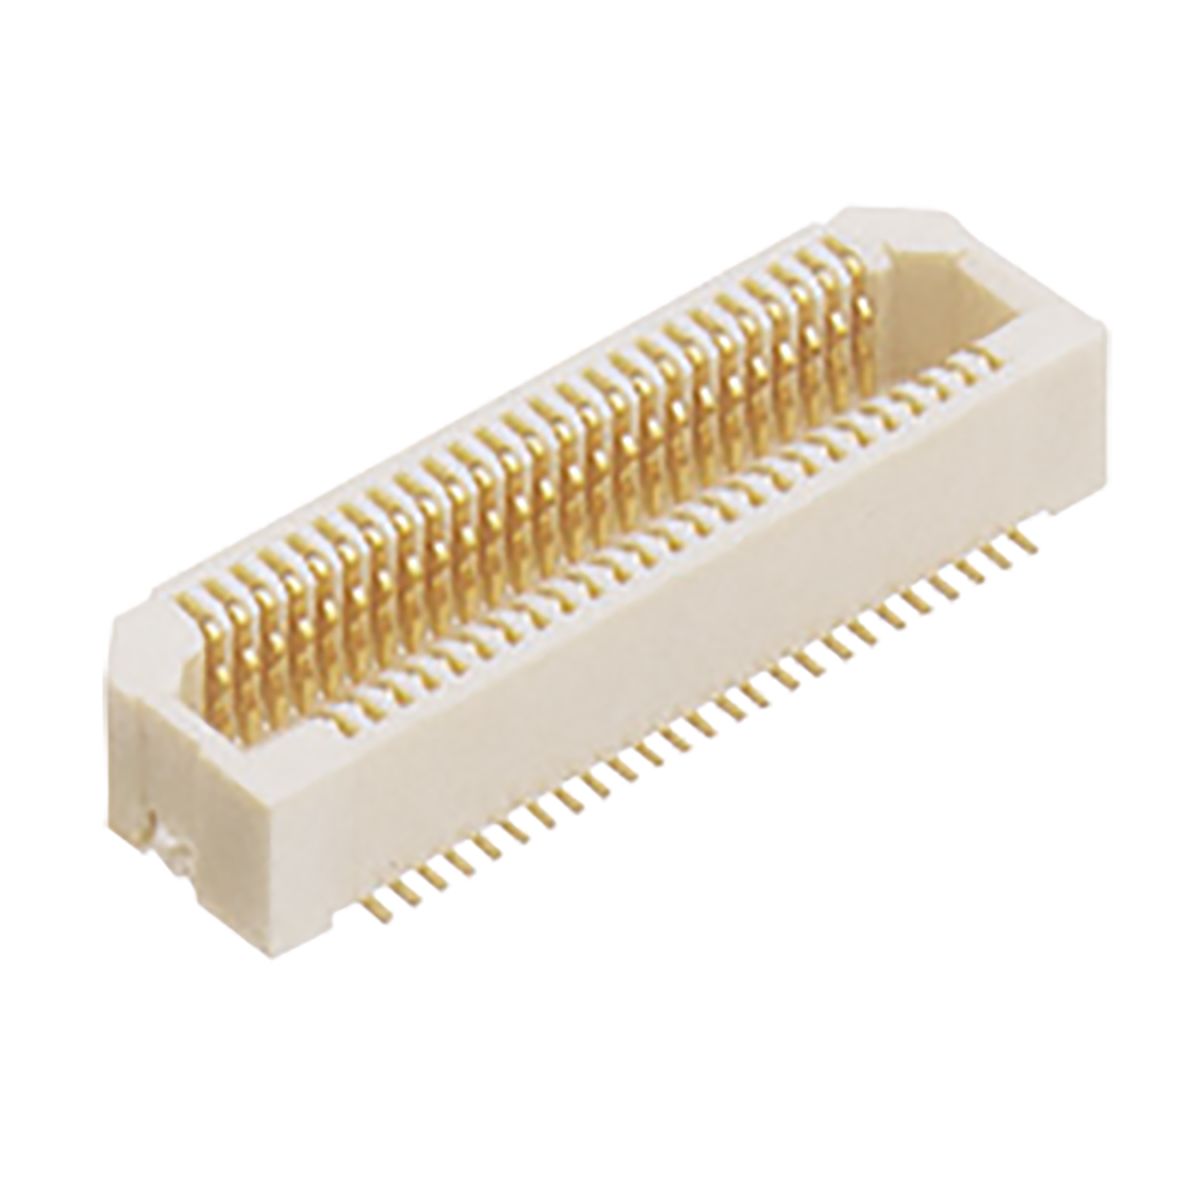 Conector hembra para PCB Panasonic serie P5KS, de 50 vías en 2 filas, paso 0.5mm, 60 V, 16A, Montaje Superficial, para